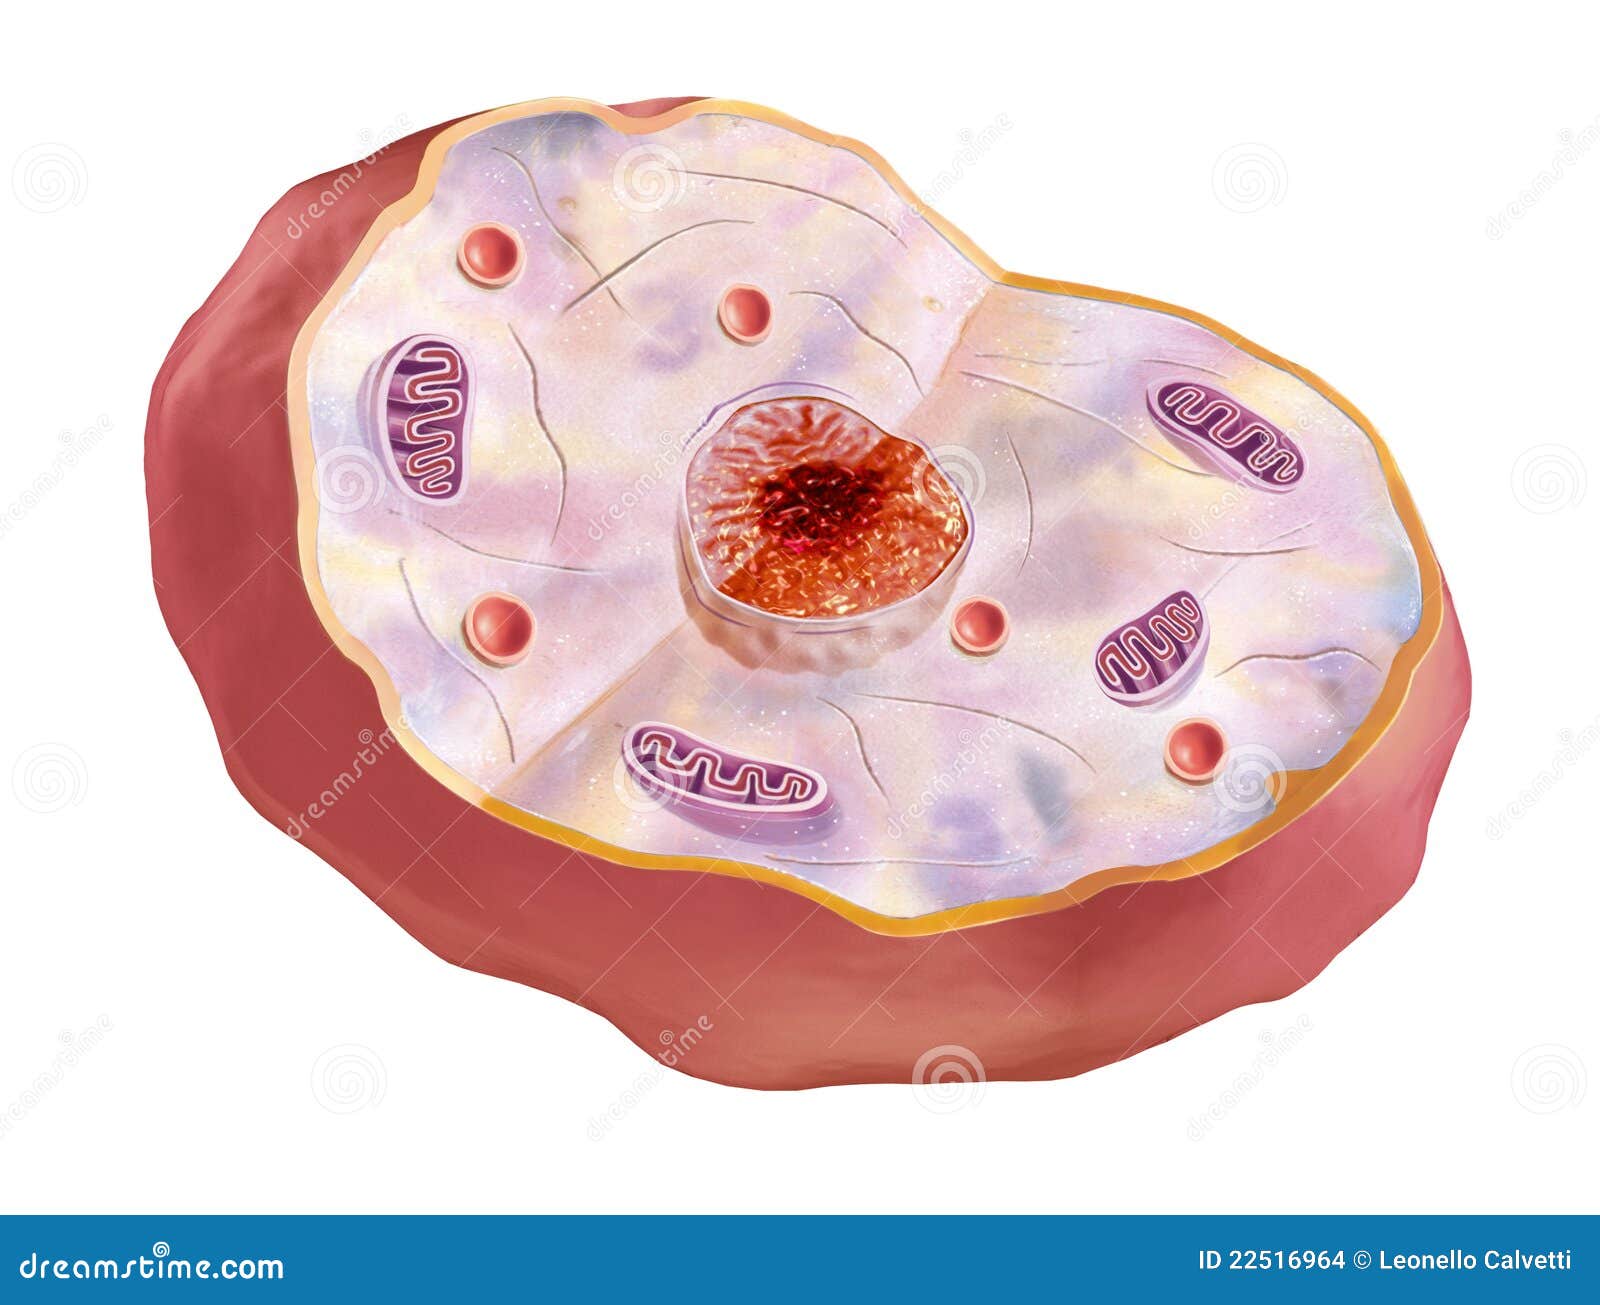 Human cell, anatomy image. stock illustration. Illustration of organ